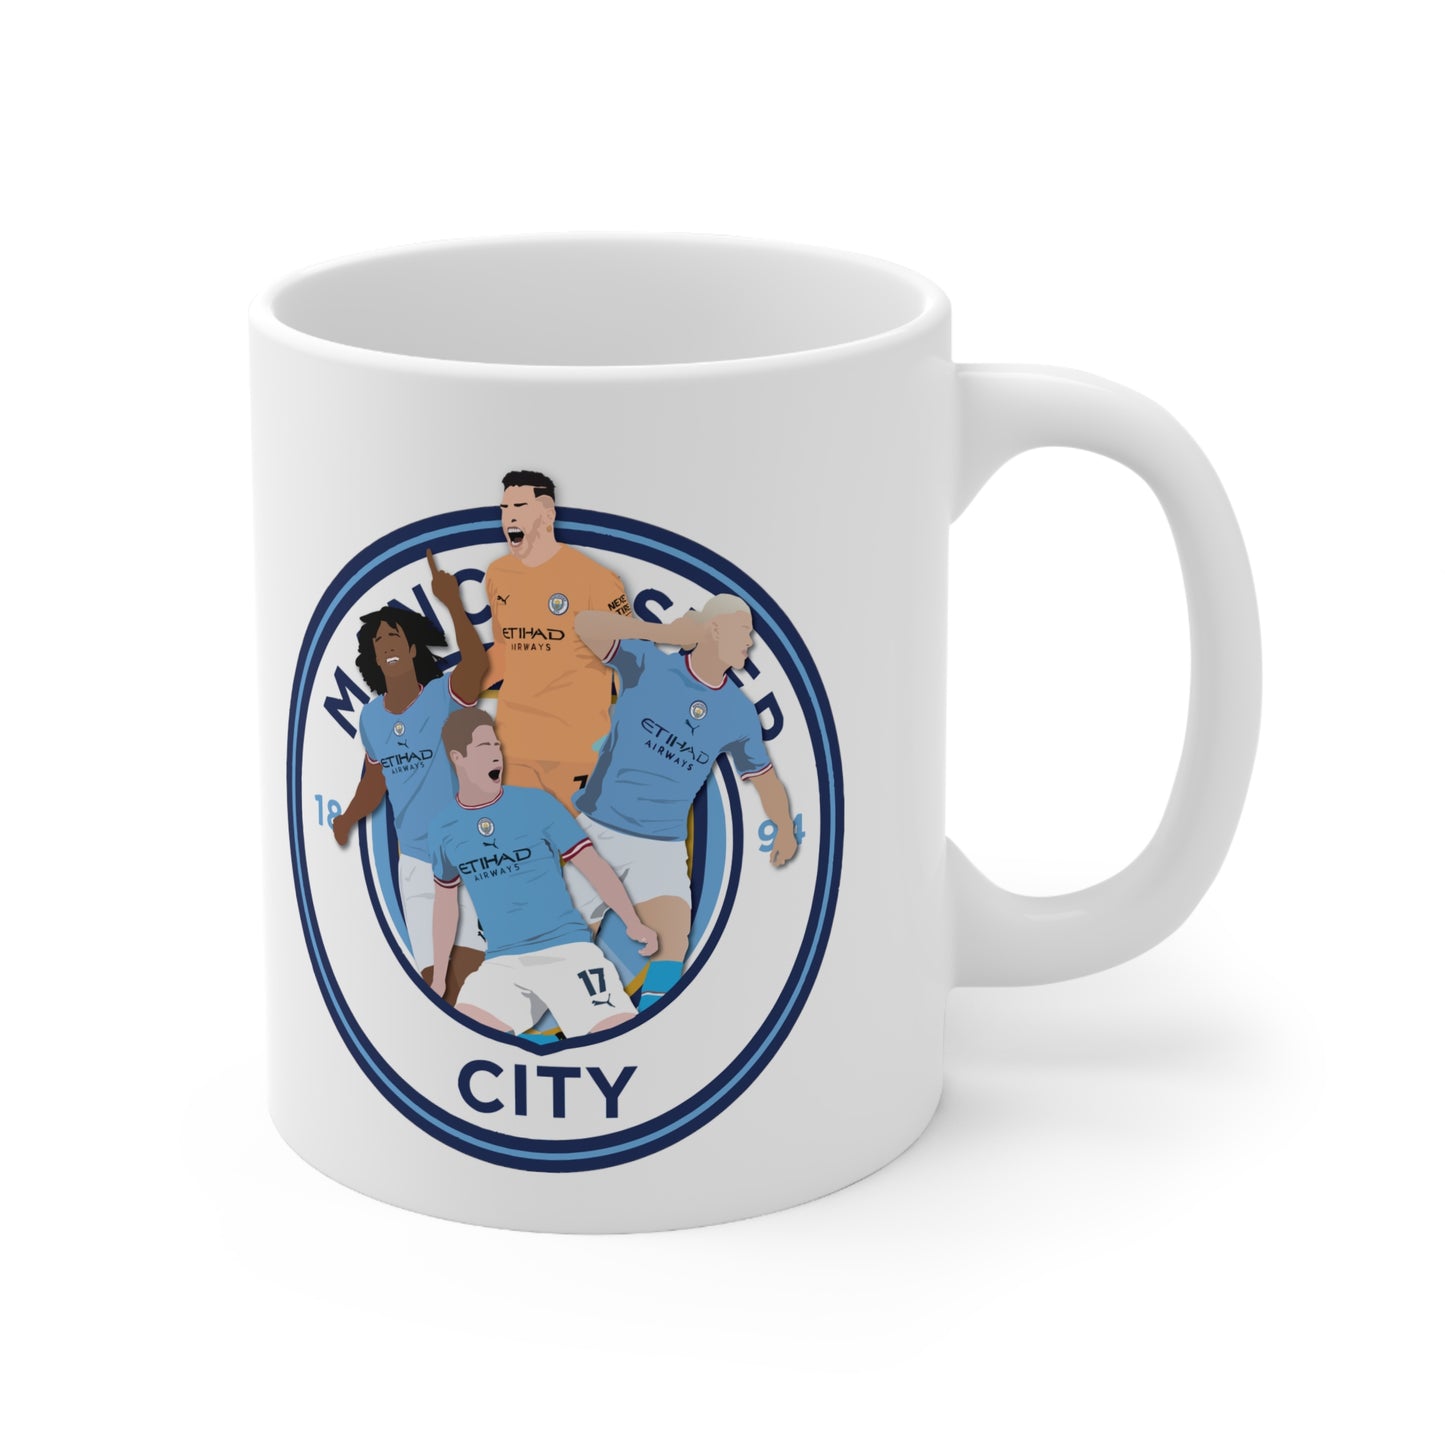 Manchester City koffiemok